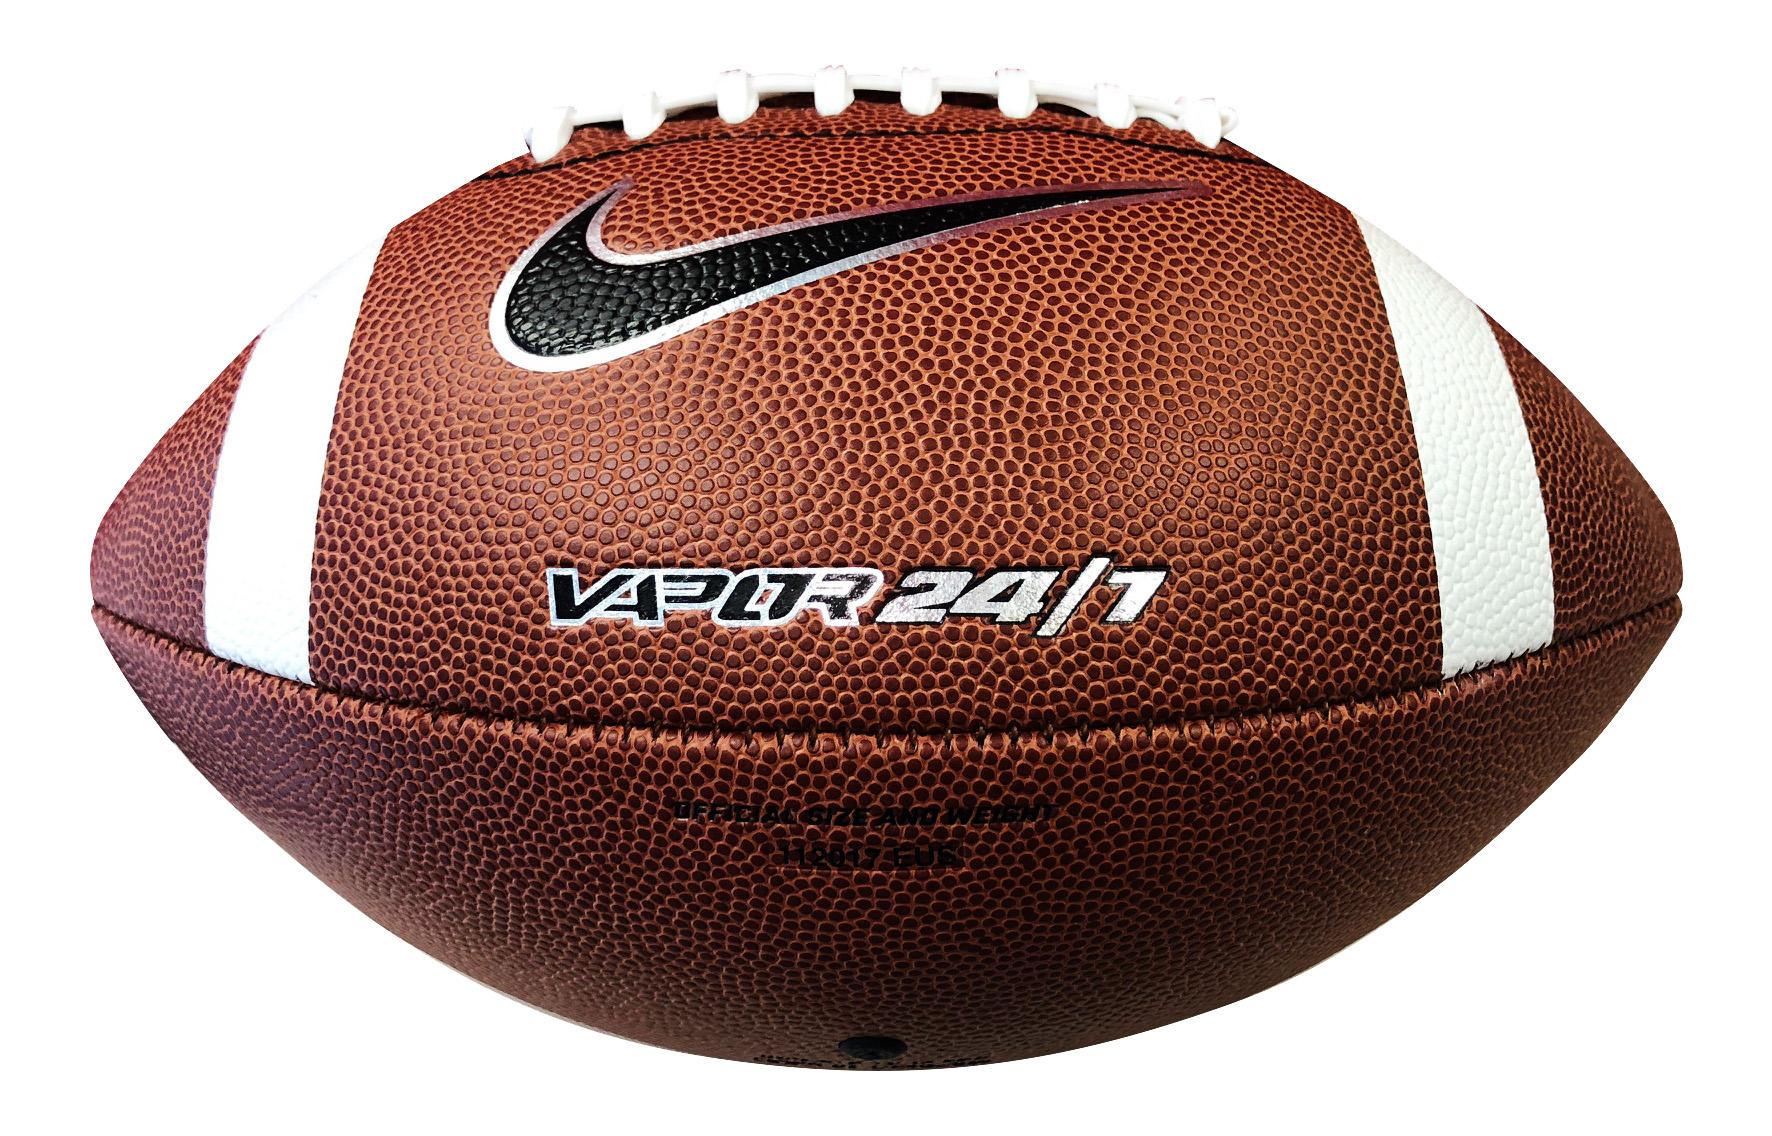 Penn State Nike Replica Football | Souvenirs > SPORT ACCESSORIES > FOOTBALL